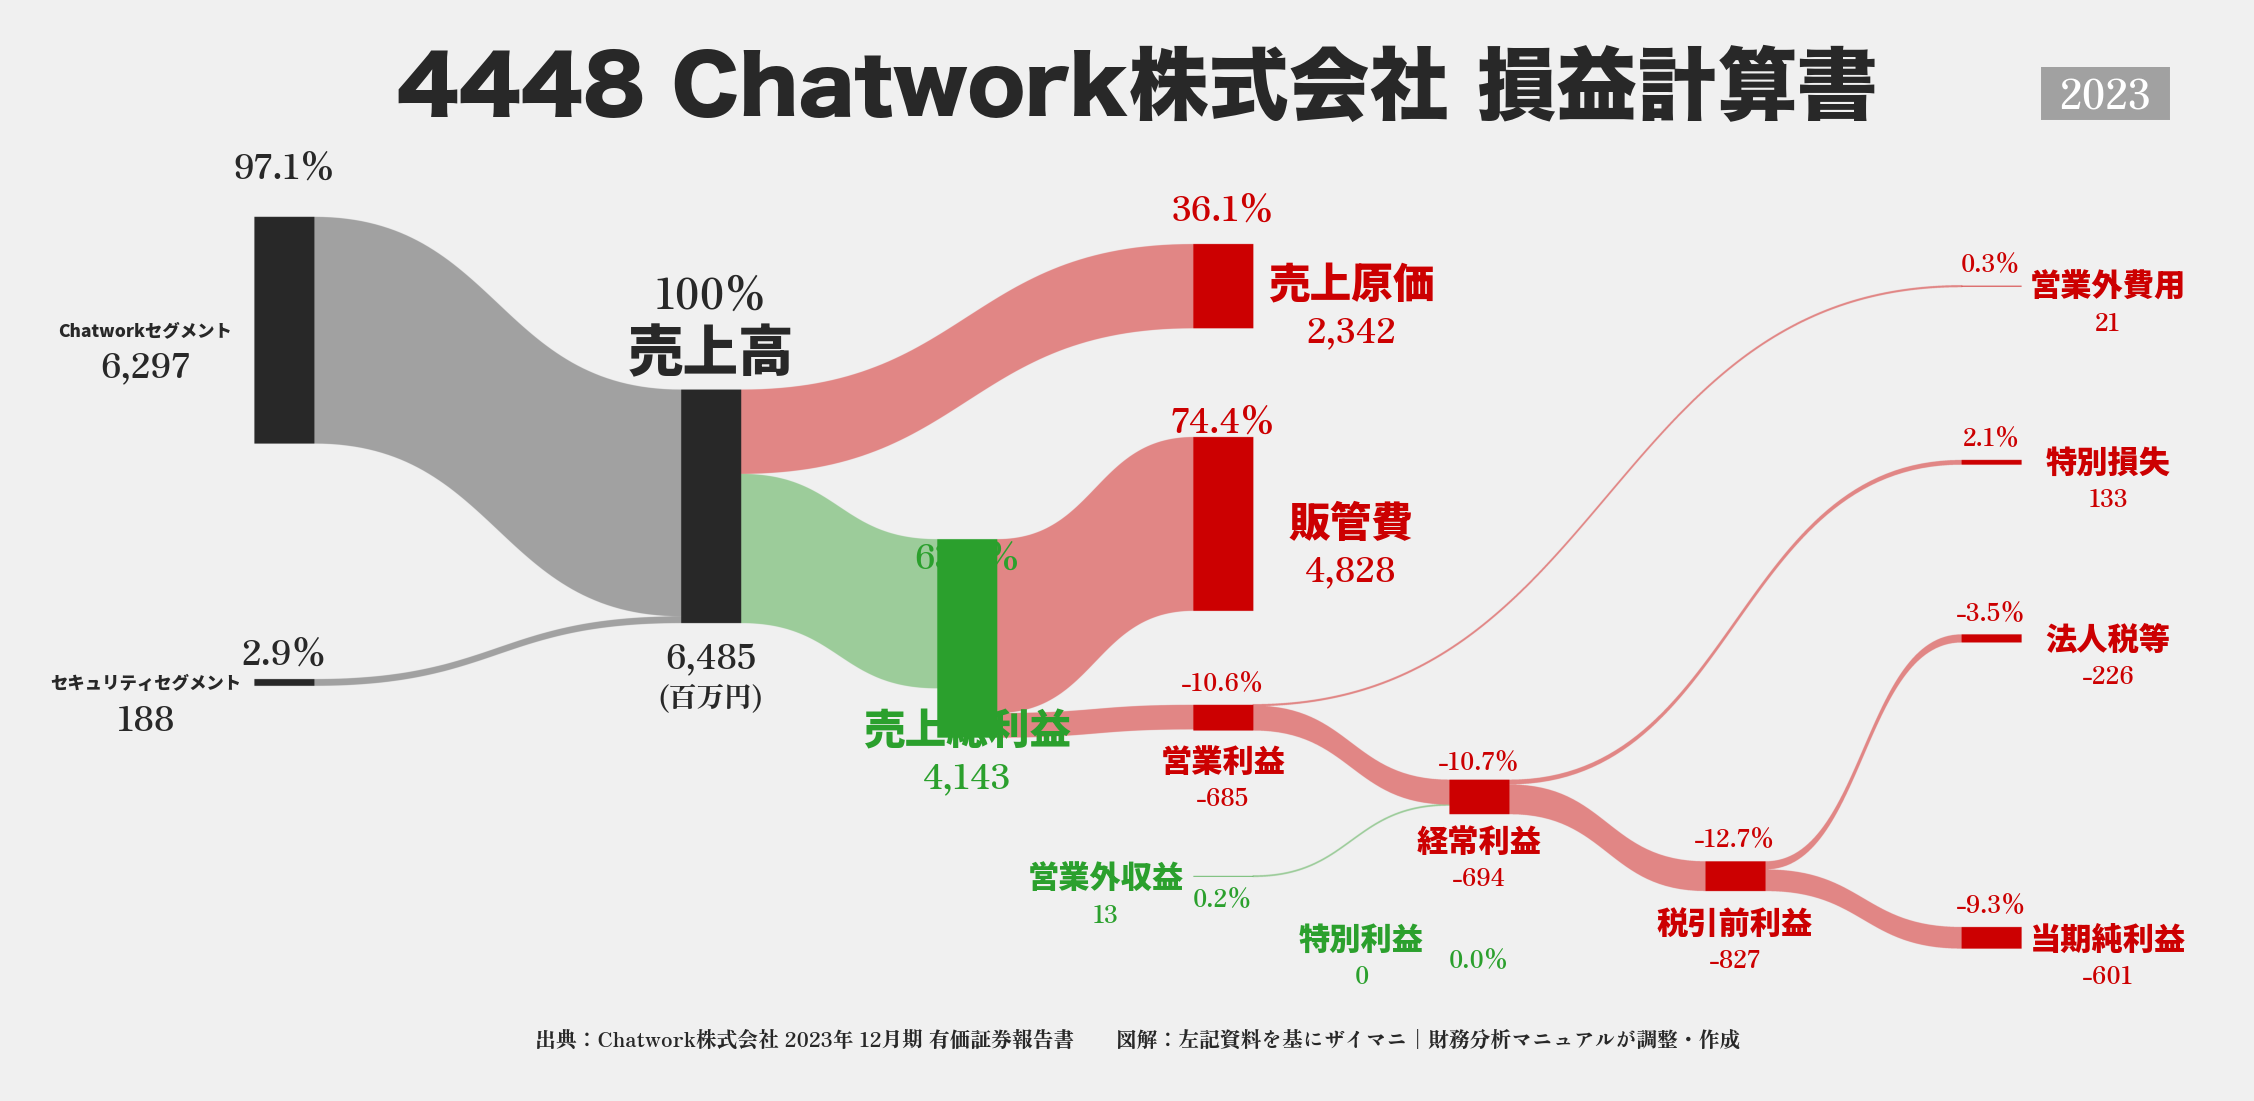 Chatwork｜4448の損益計算書サンキーダイアグラム図解資料